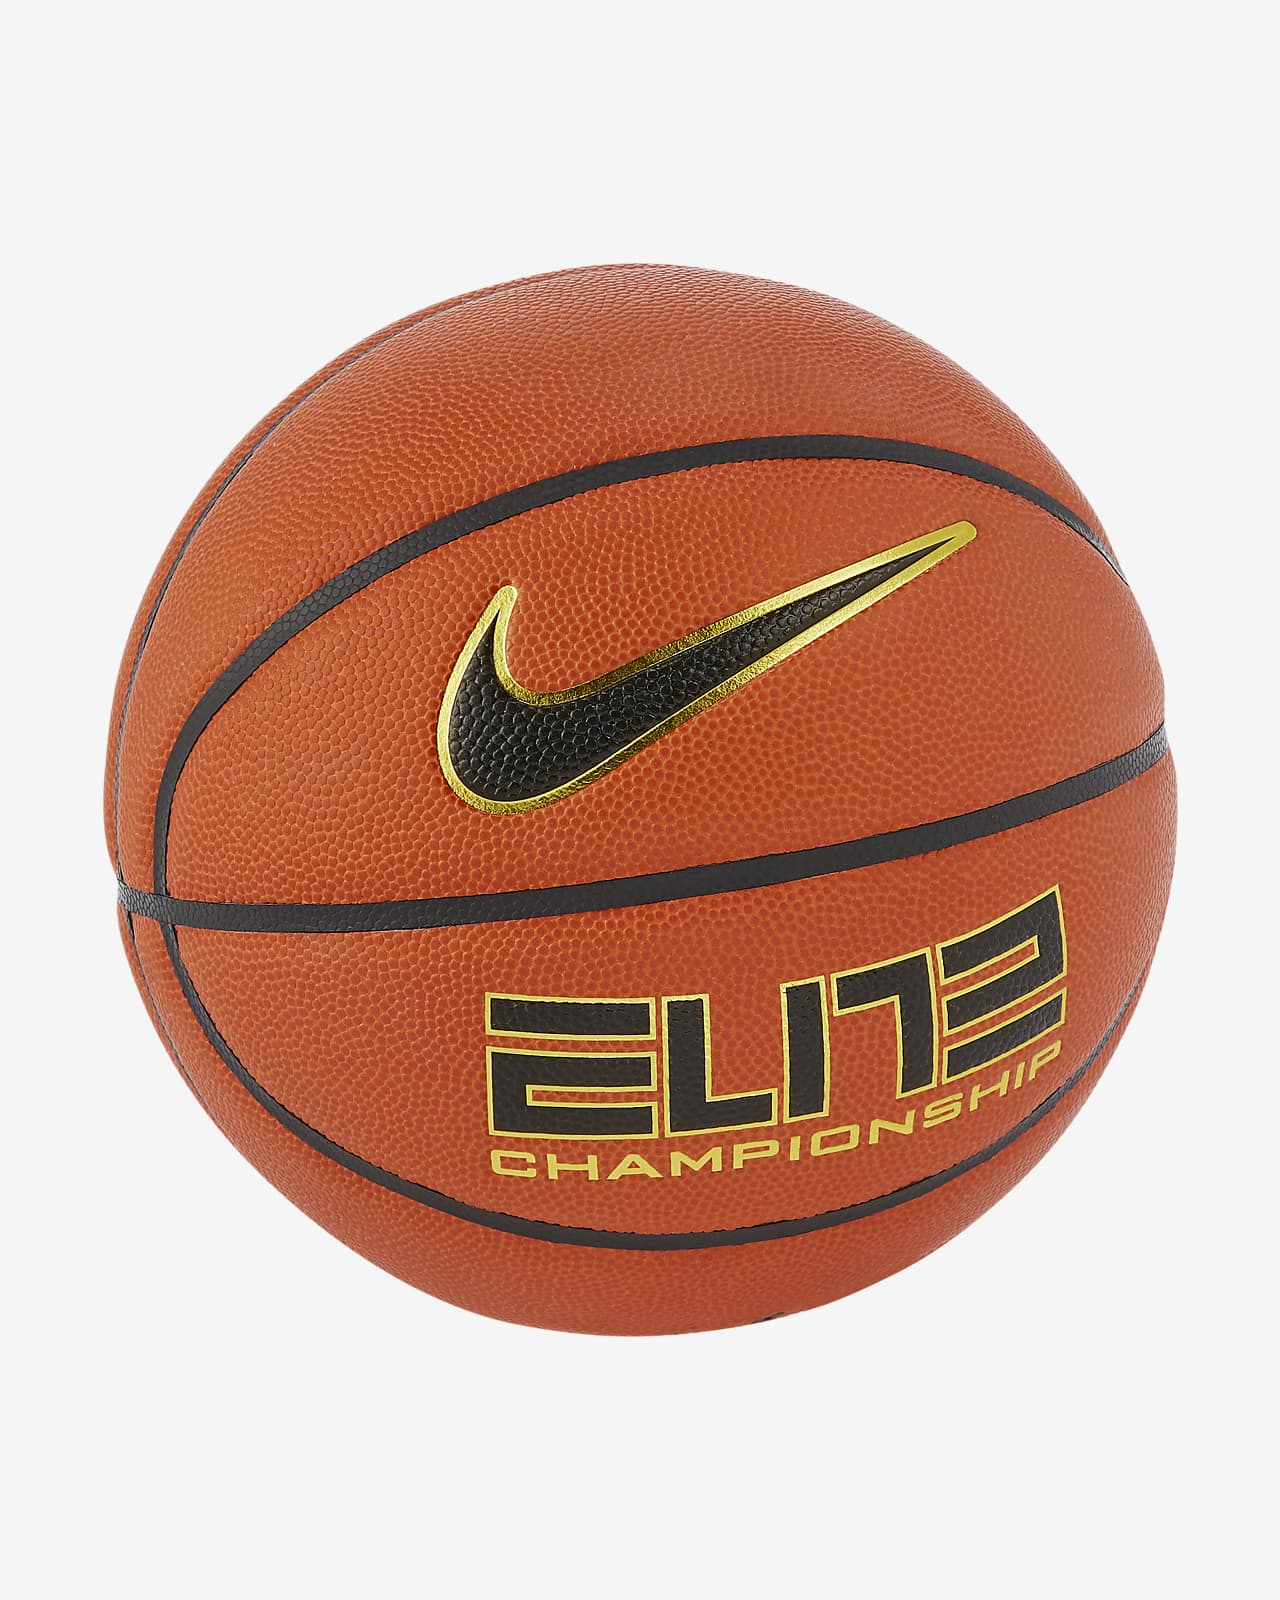  Basketball Equipment Accessories - Nike / Basketball Equipment  Accessories / Bas: Sports & Outdoors